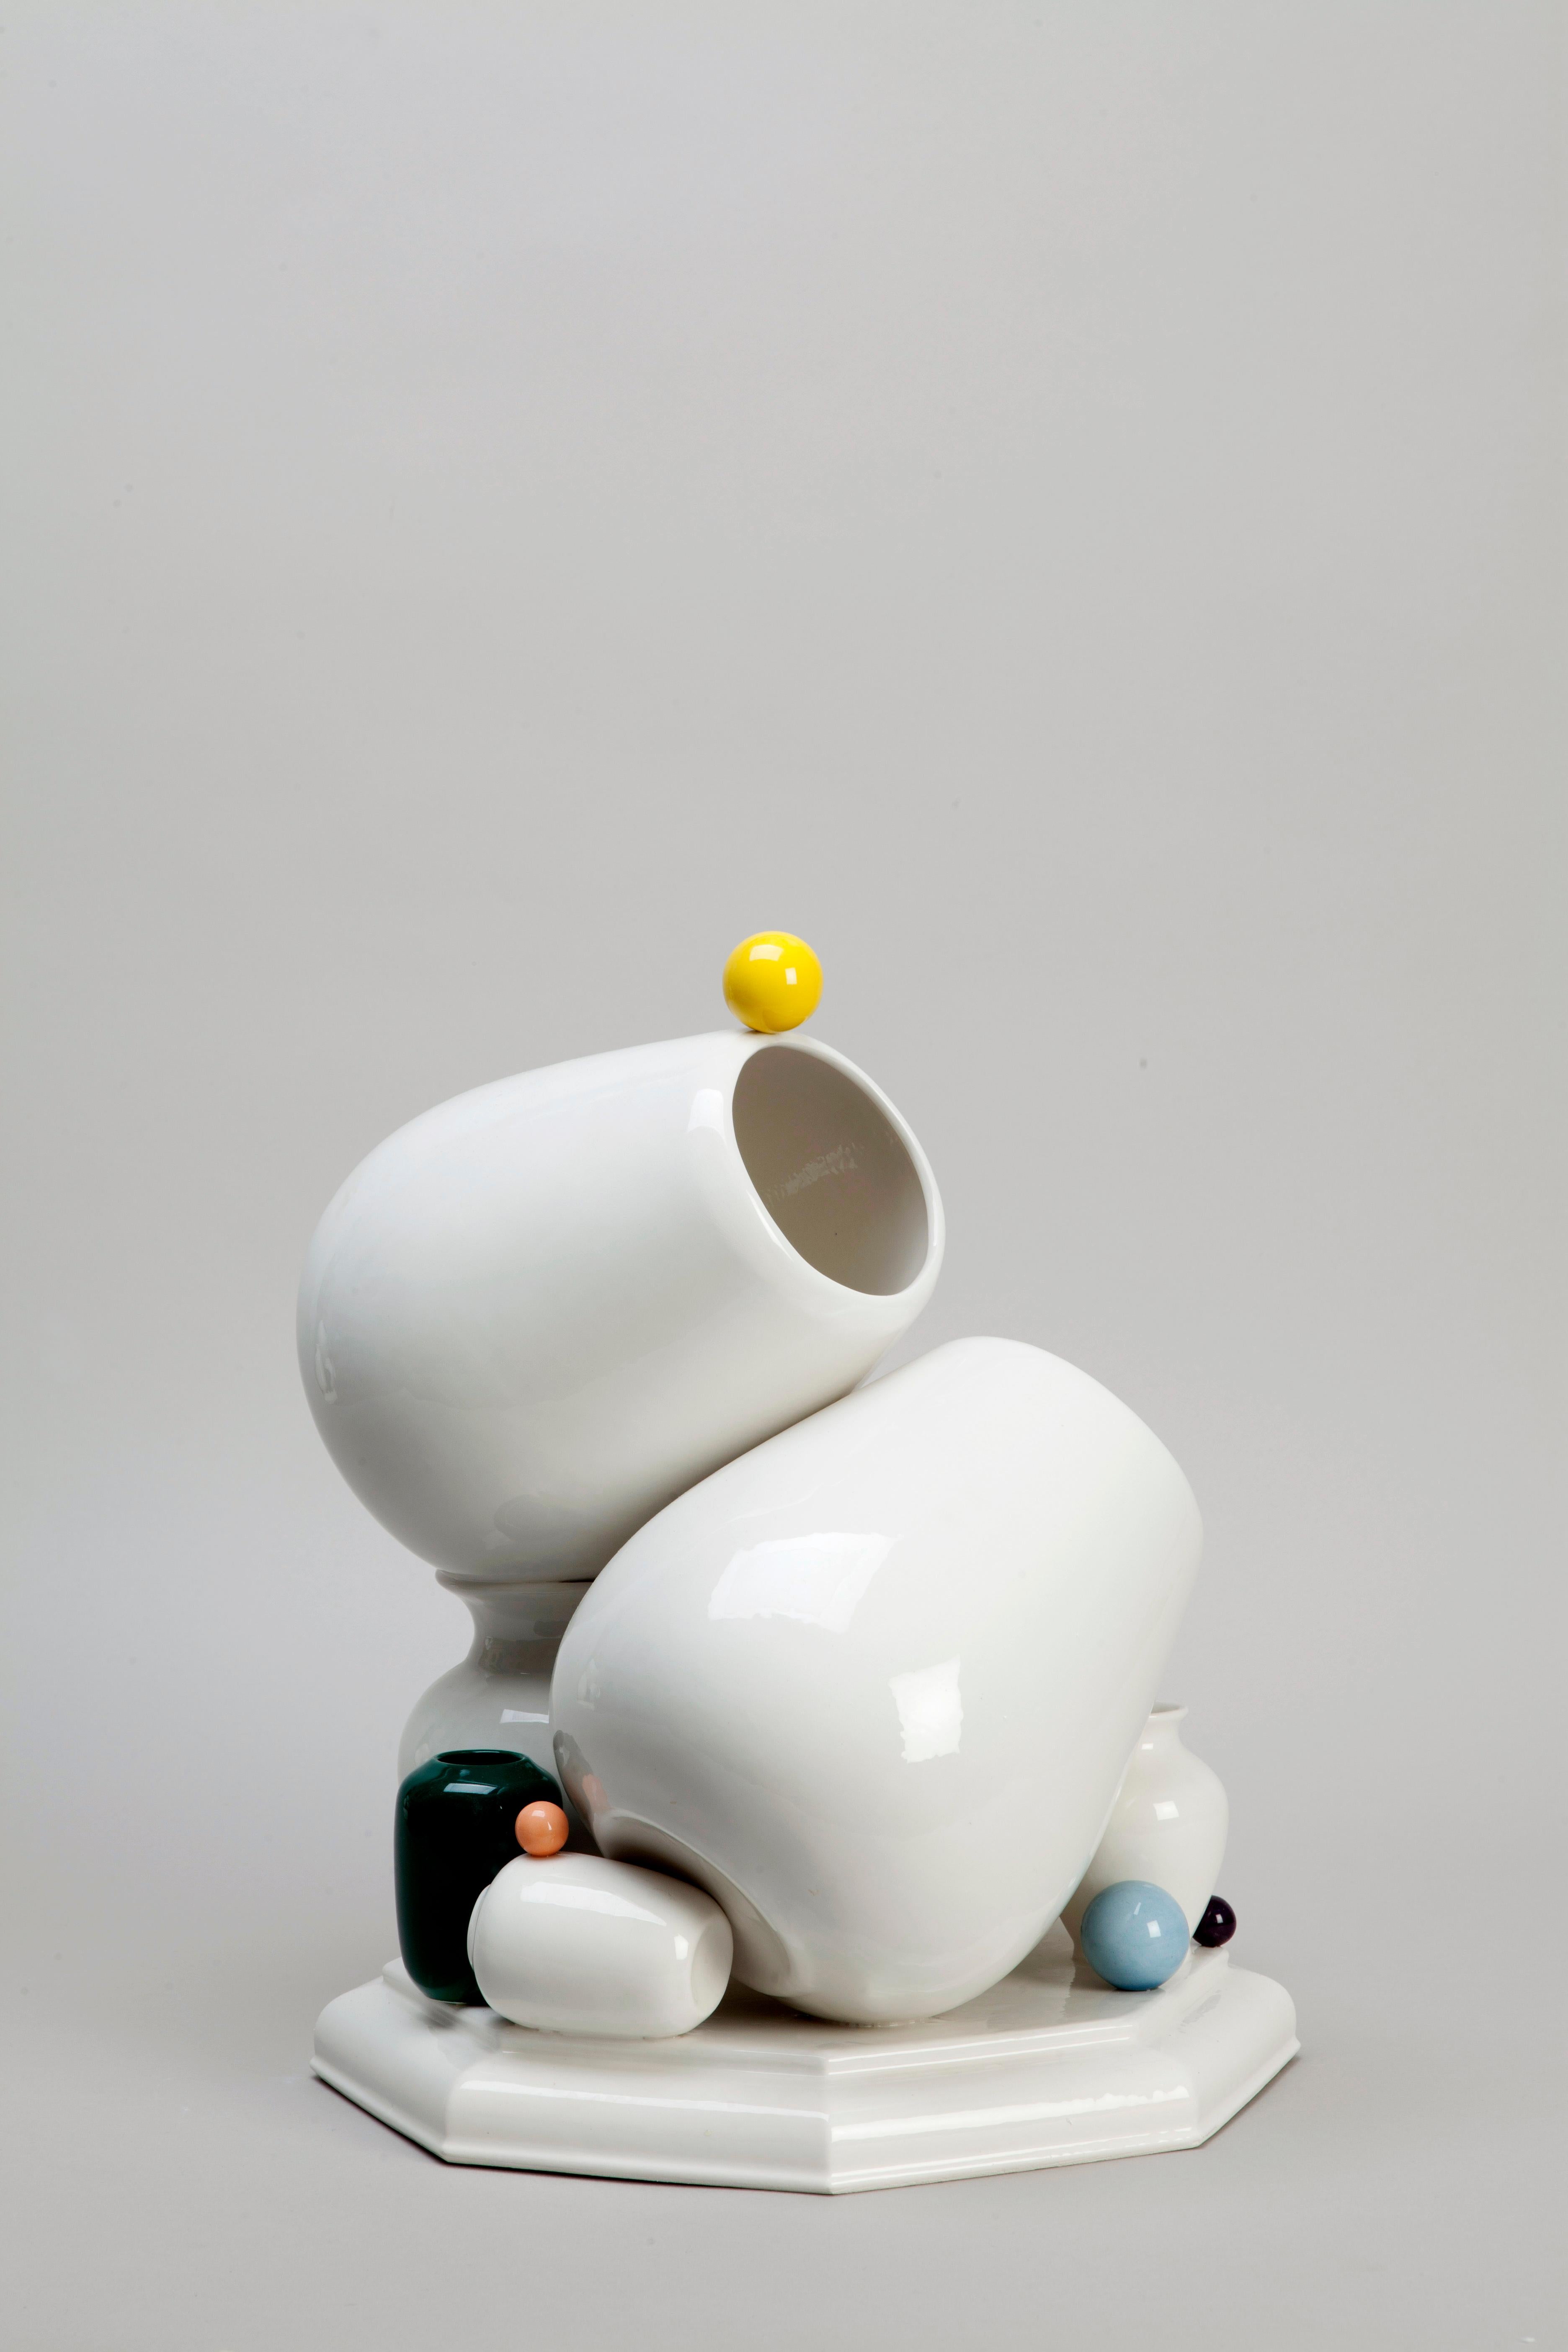 Italian Ceramic Abstract Sculpture by Andrea Salvatori Italy Contemporary, 21st Century